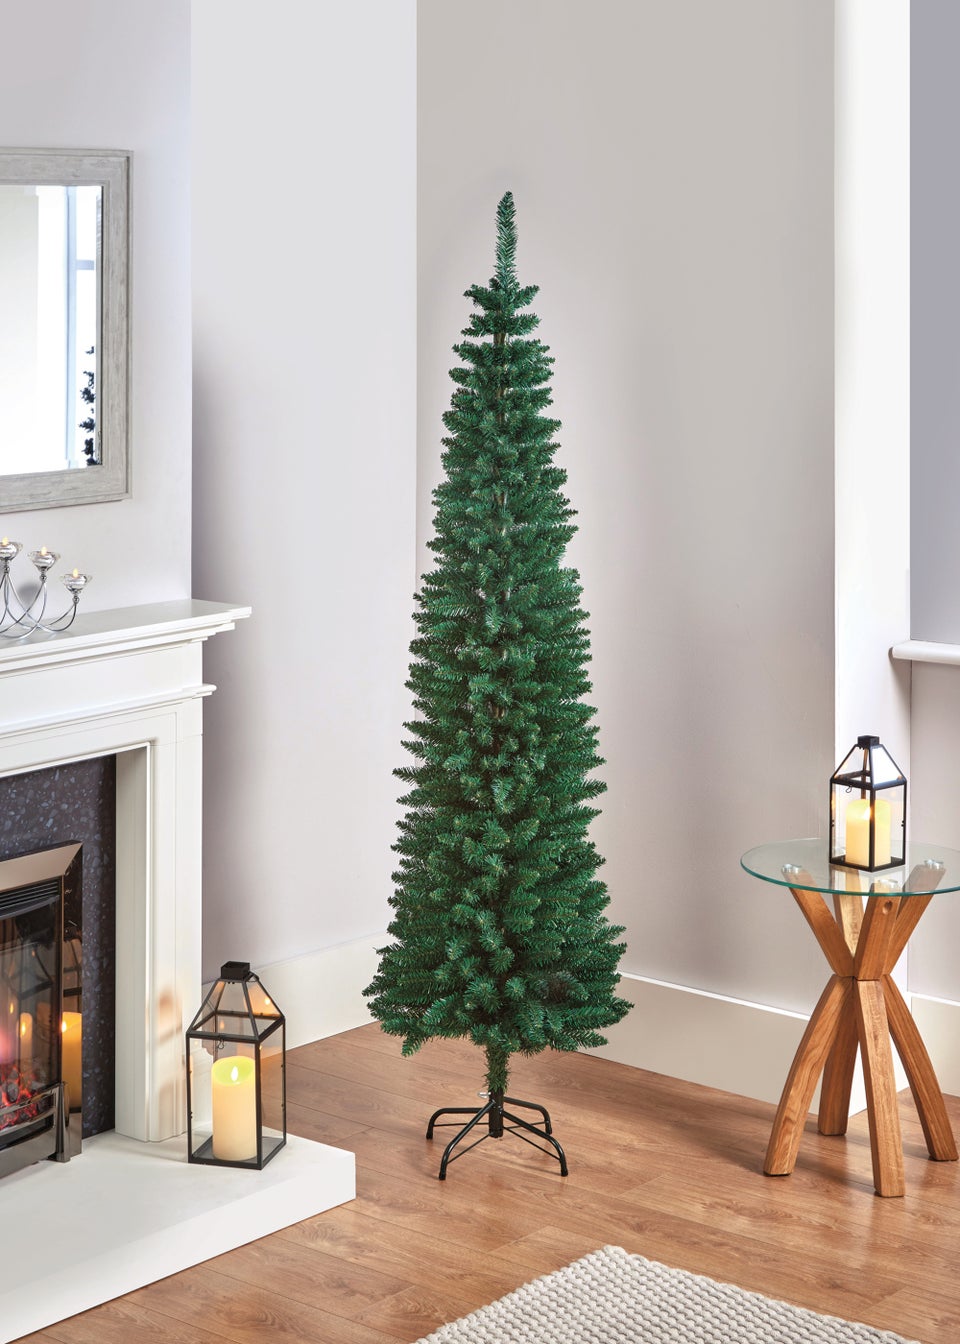 Premier Decorations Green Pencil Pine Christmas Tree 6.5ft